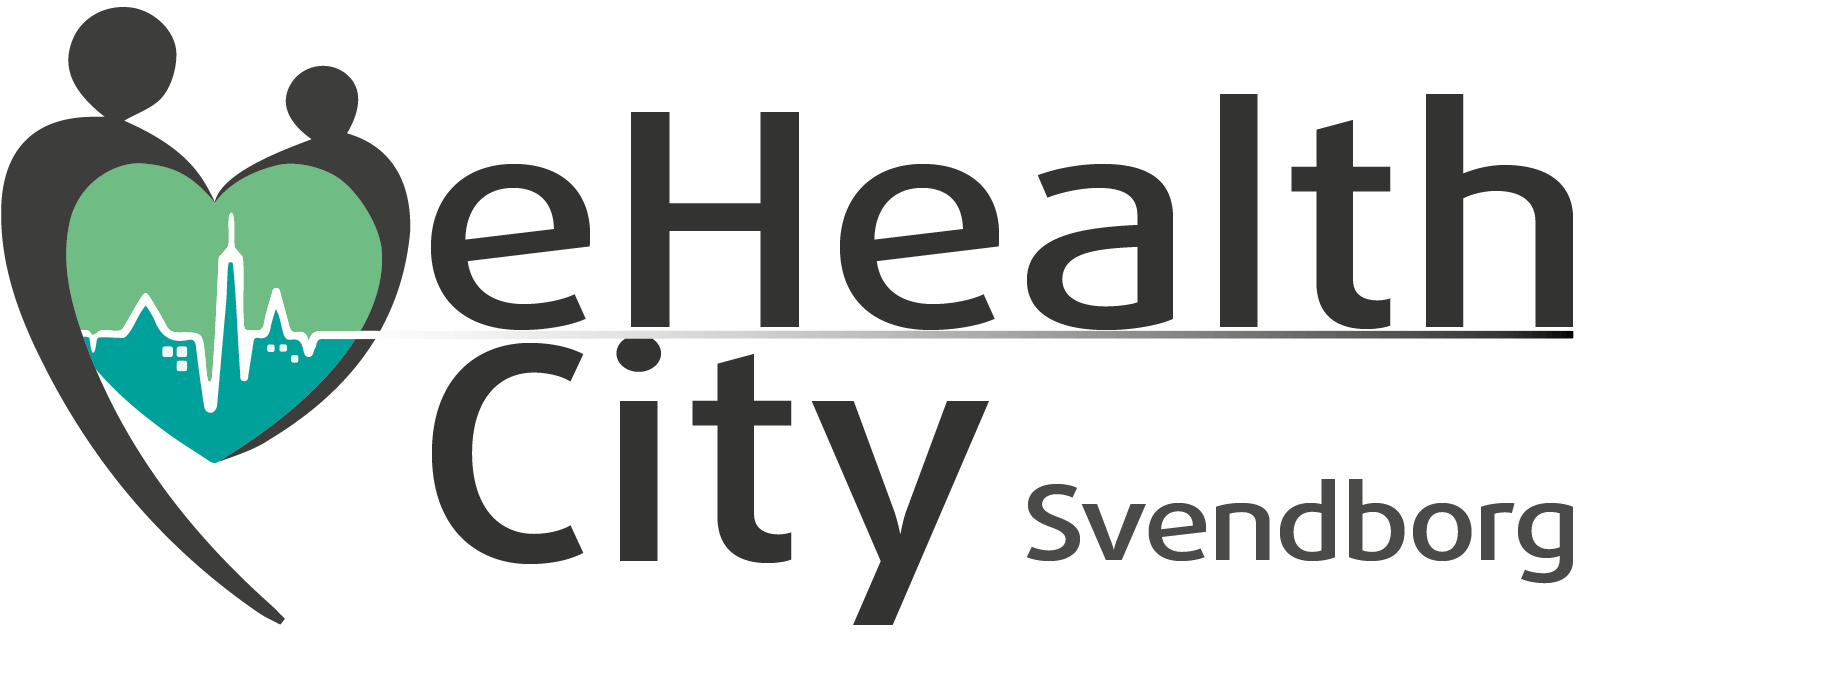 eHealth Logo - English – eHealth City Svendborg